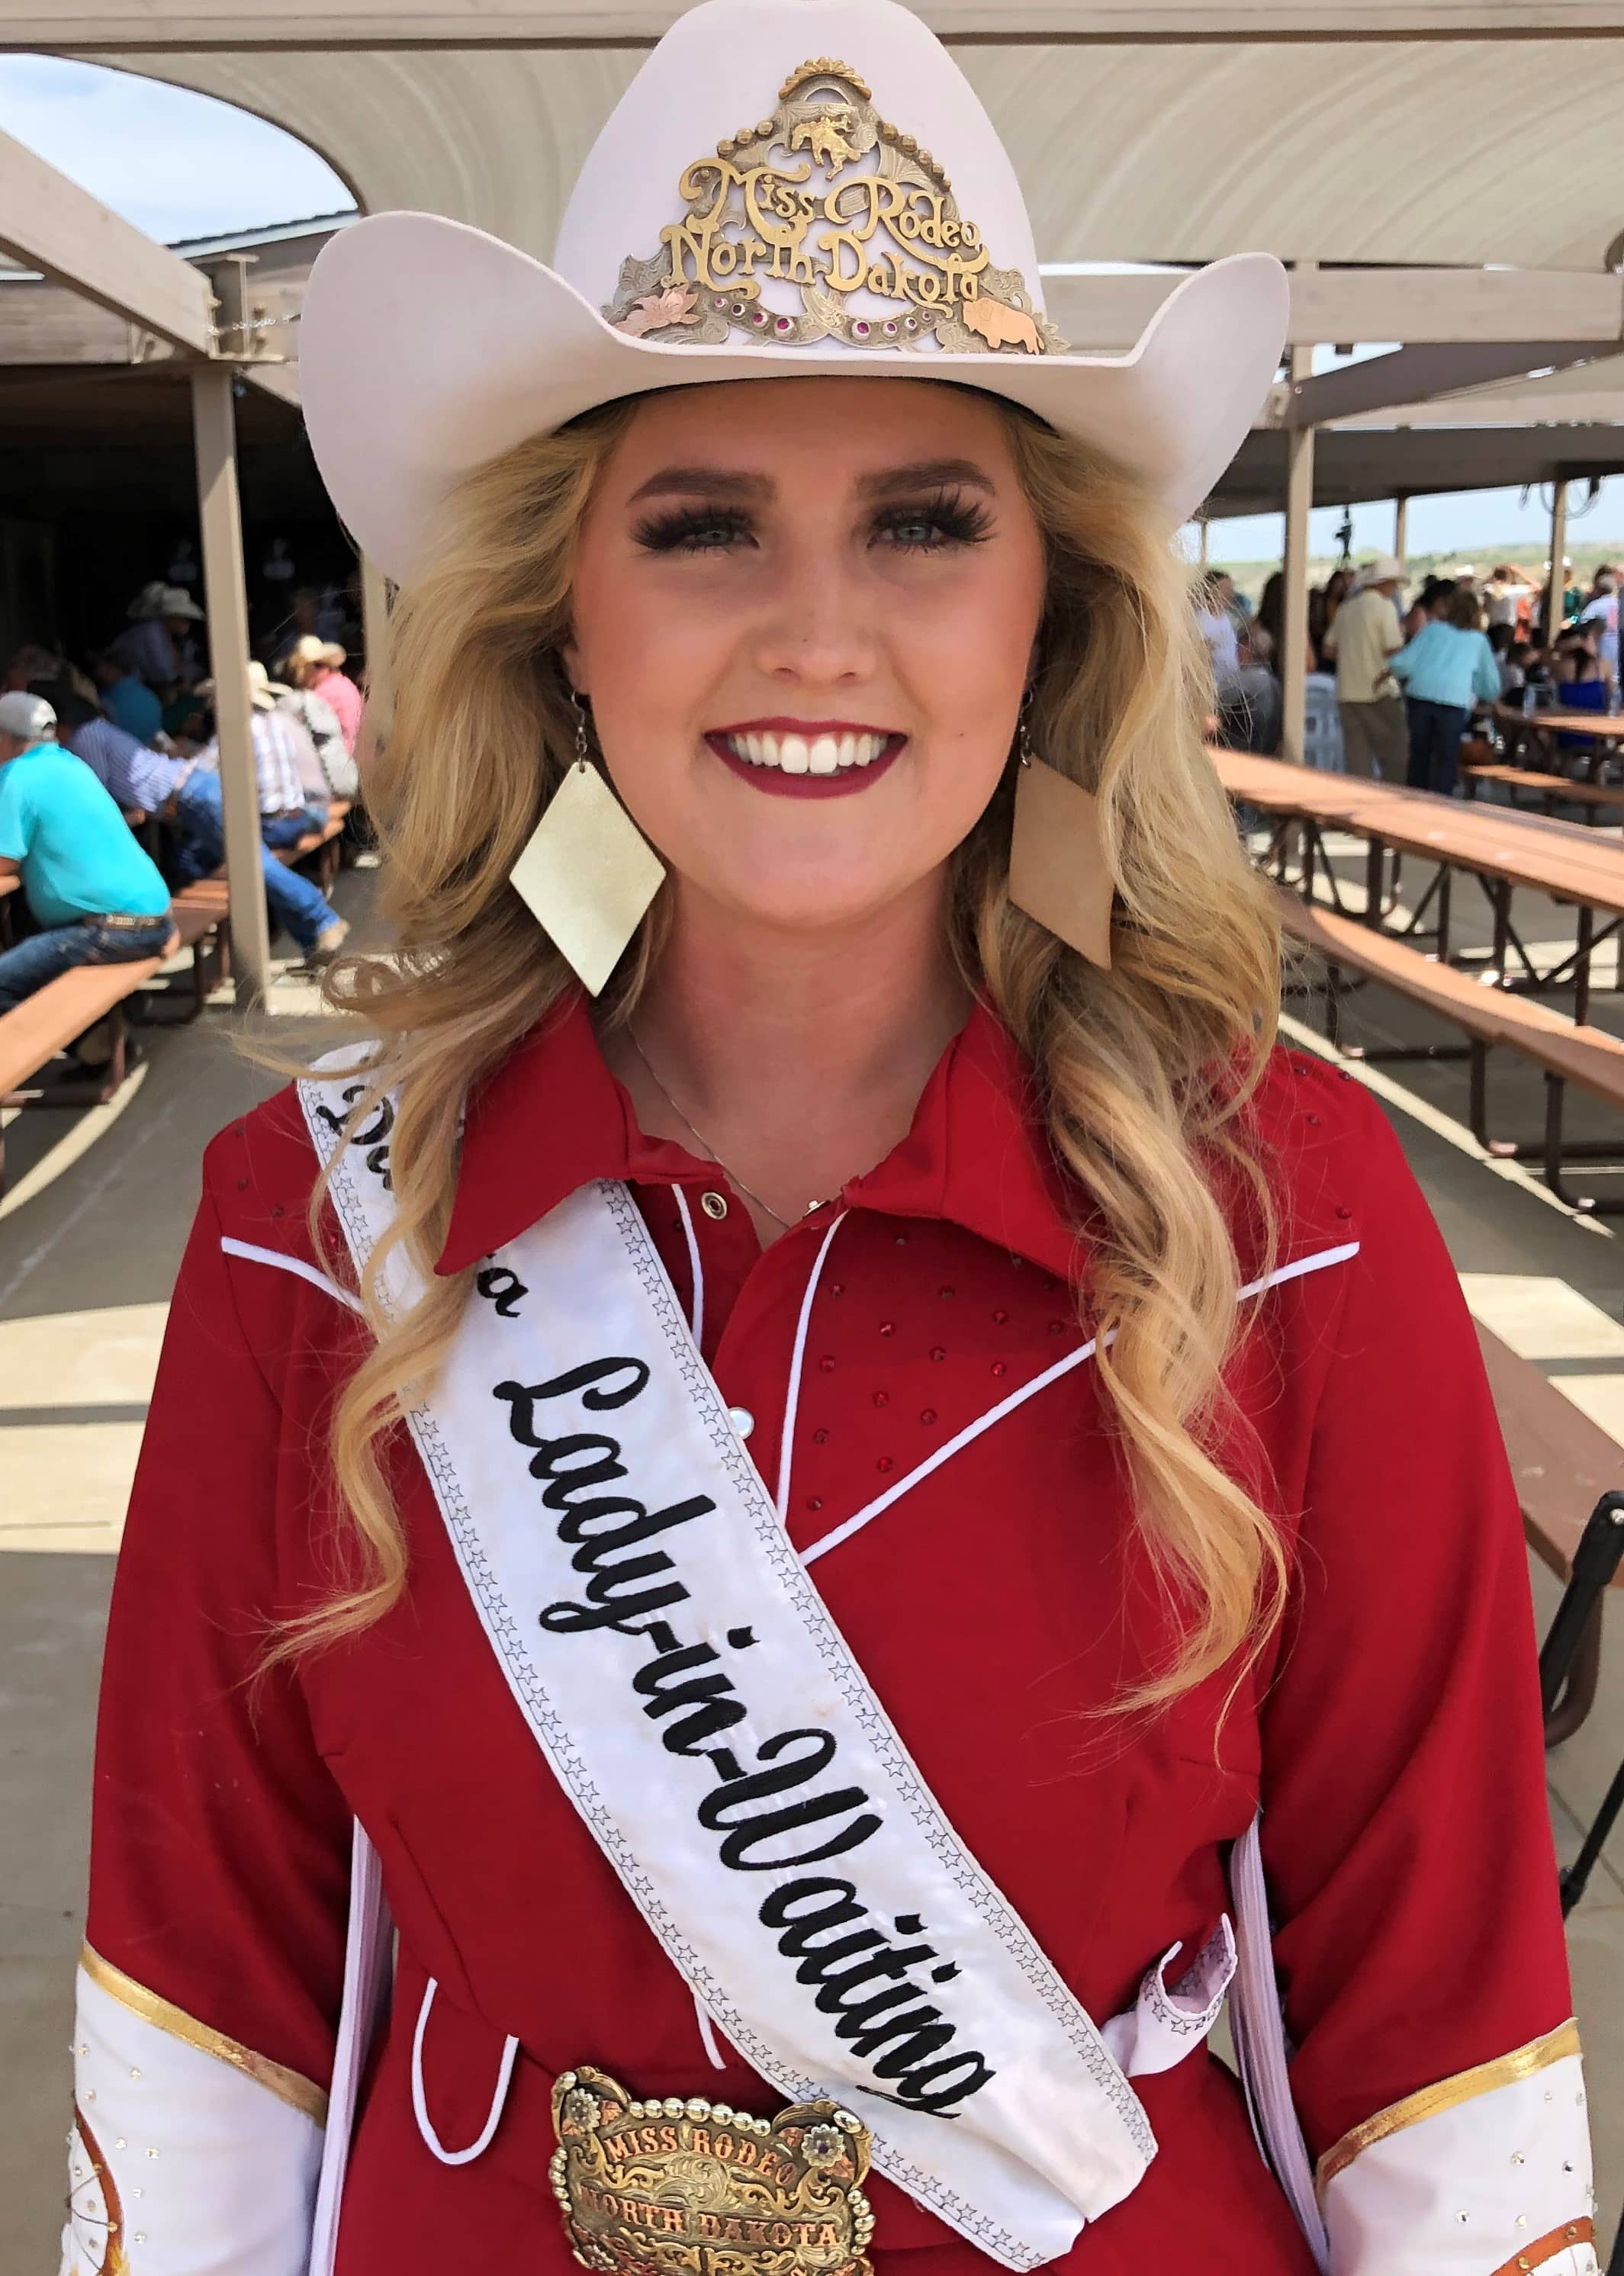 Lindsey Miller "Lady In Waiting" Miss Rodeo North Dakota News Dakota